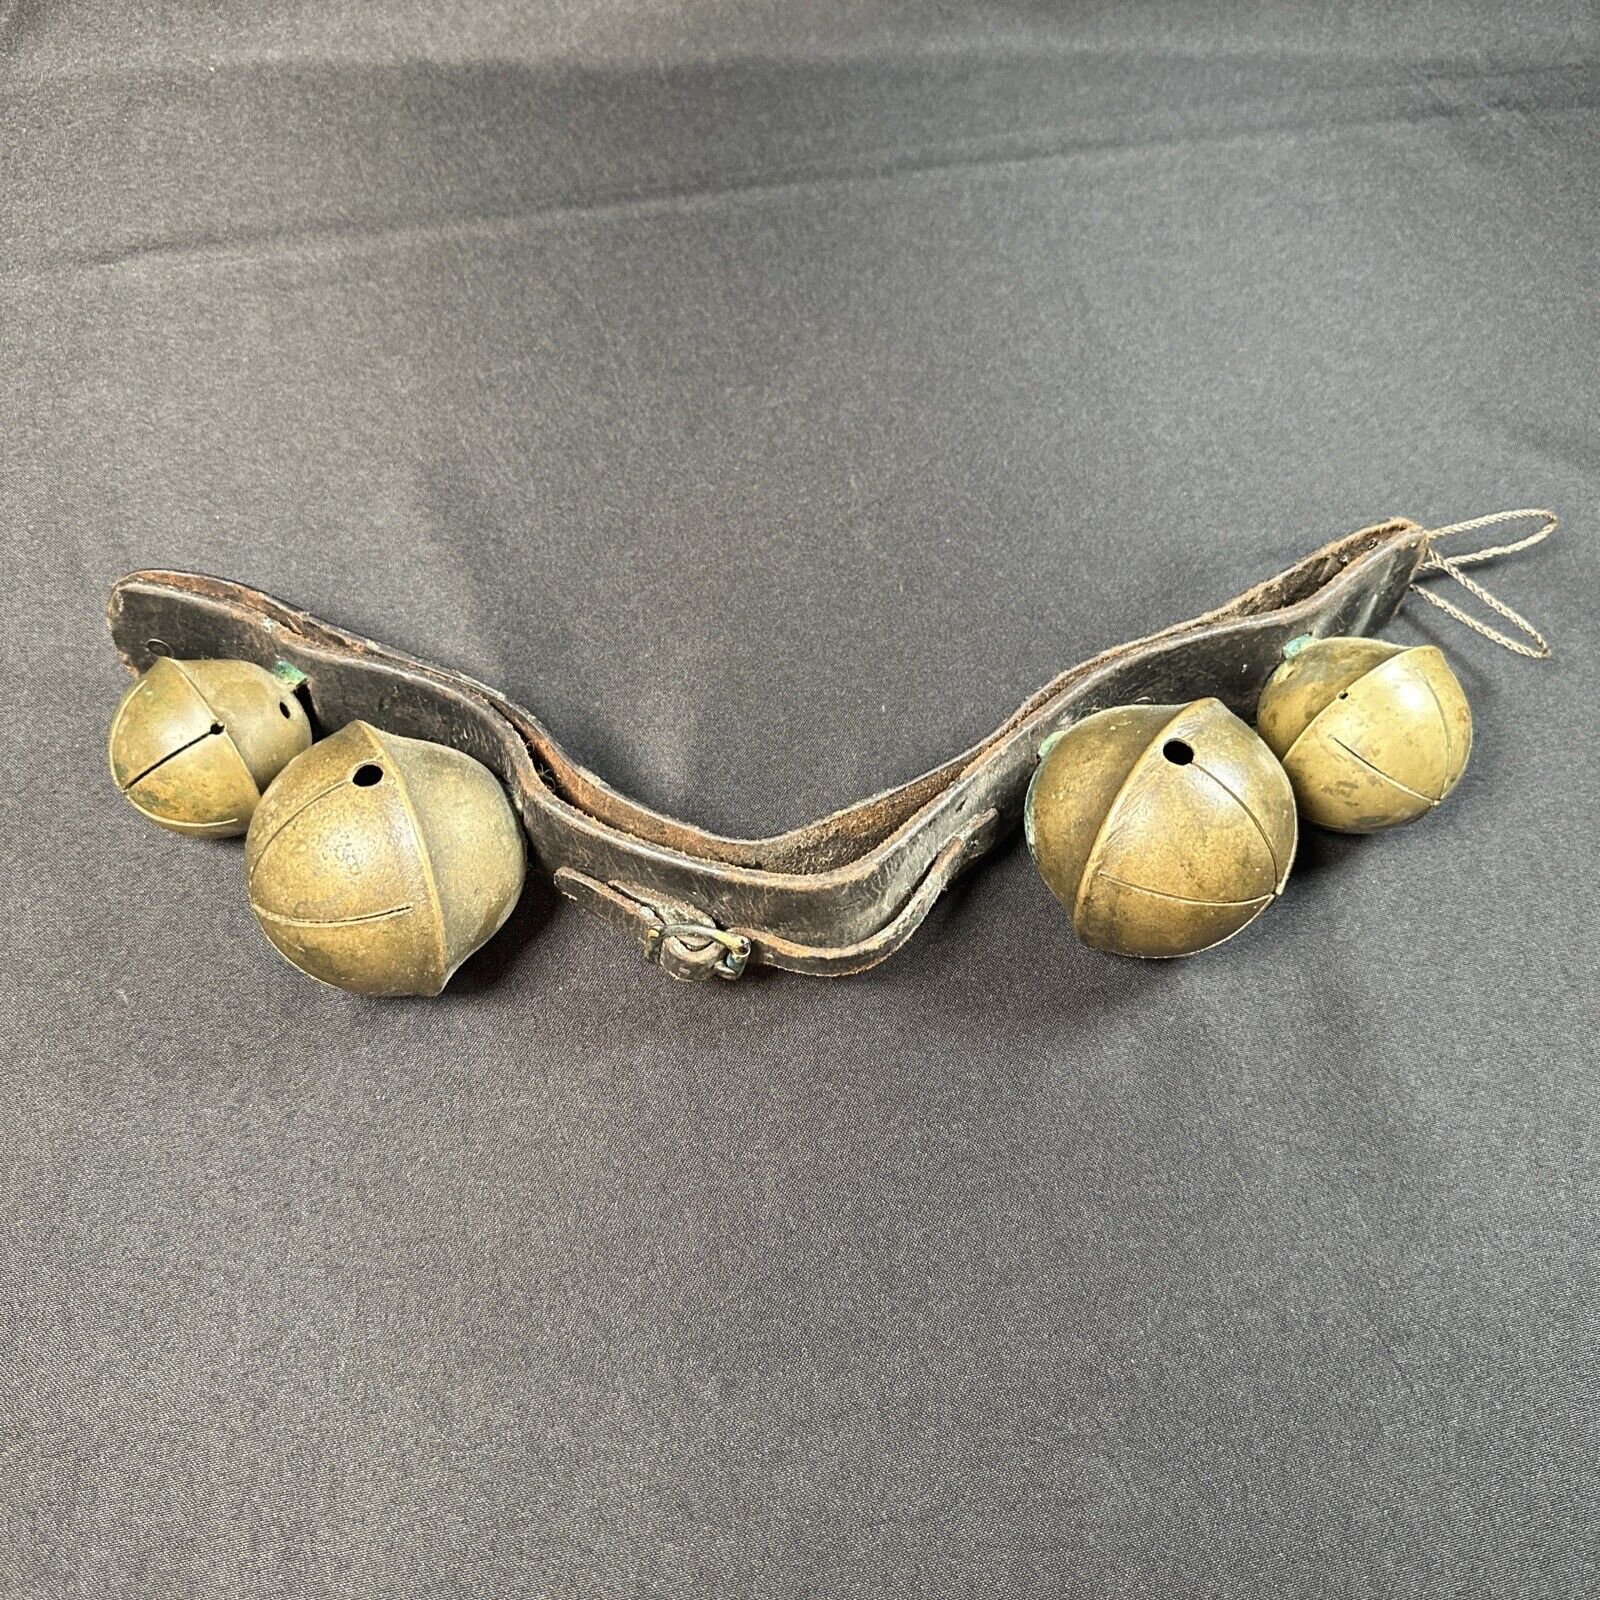 Antique 4 Brass Animal Sleigh Bells w/Leather Strap Hanger 18.5” Long Christmas